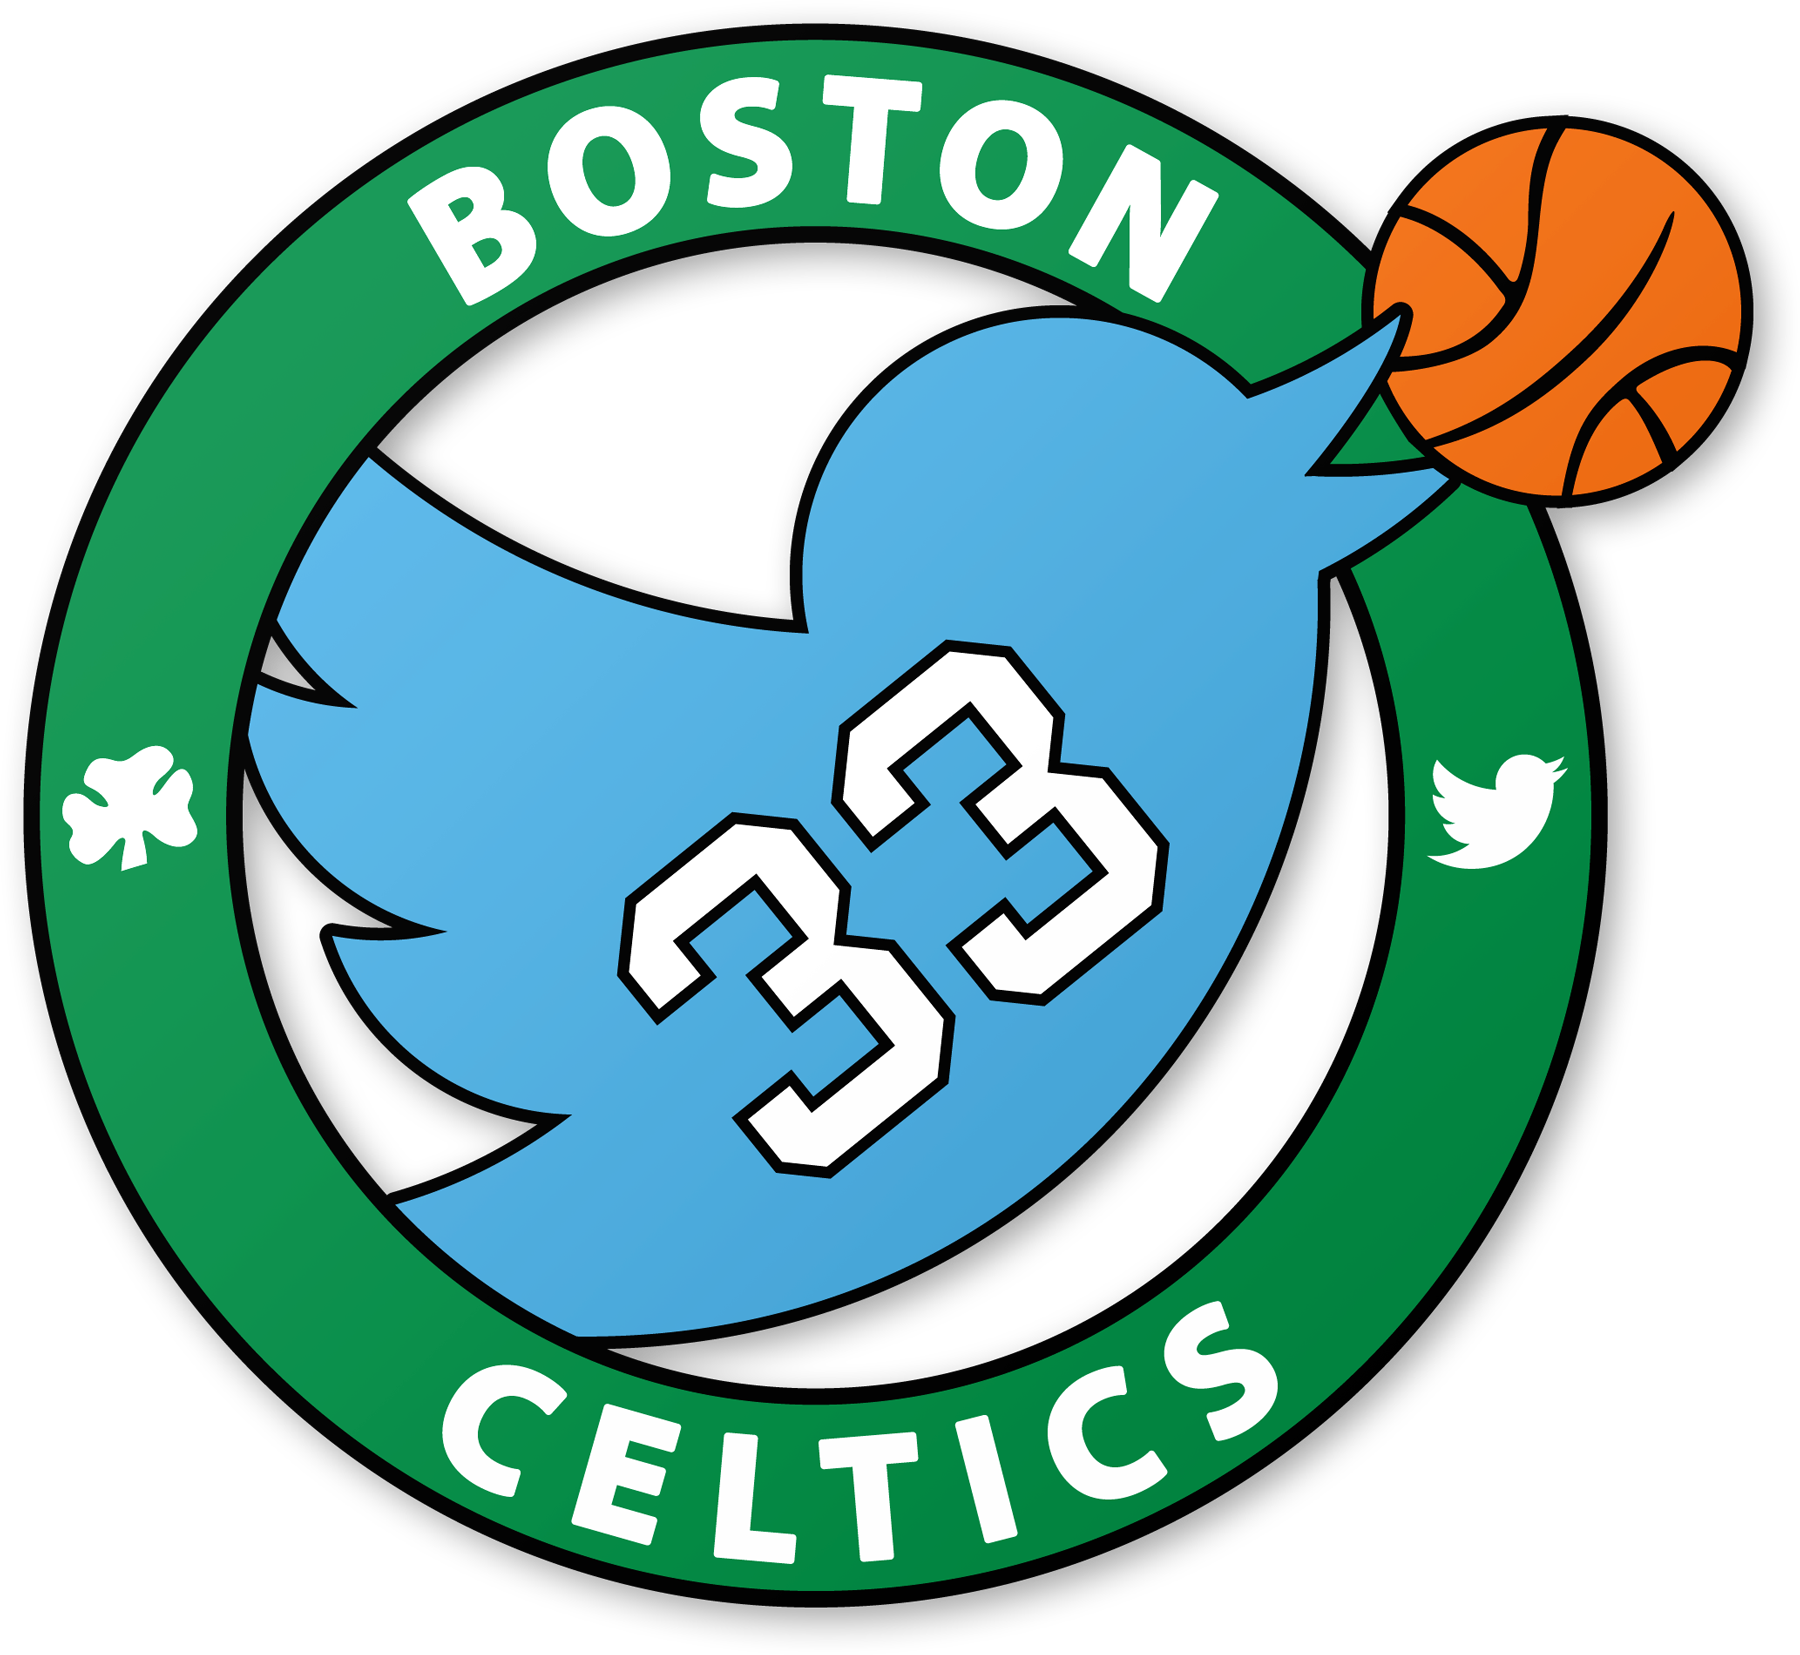 Larry Bird Twitter Logo - Twitter And Larry Bird (1800x1655)